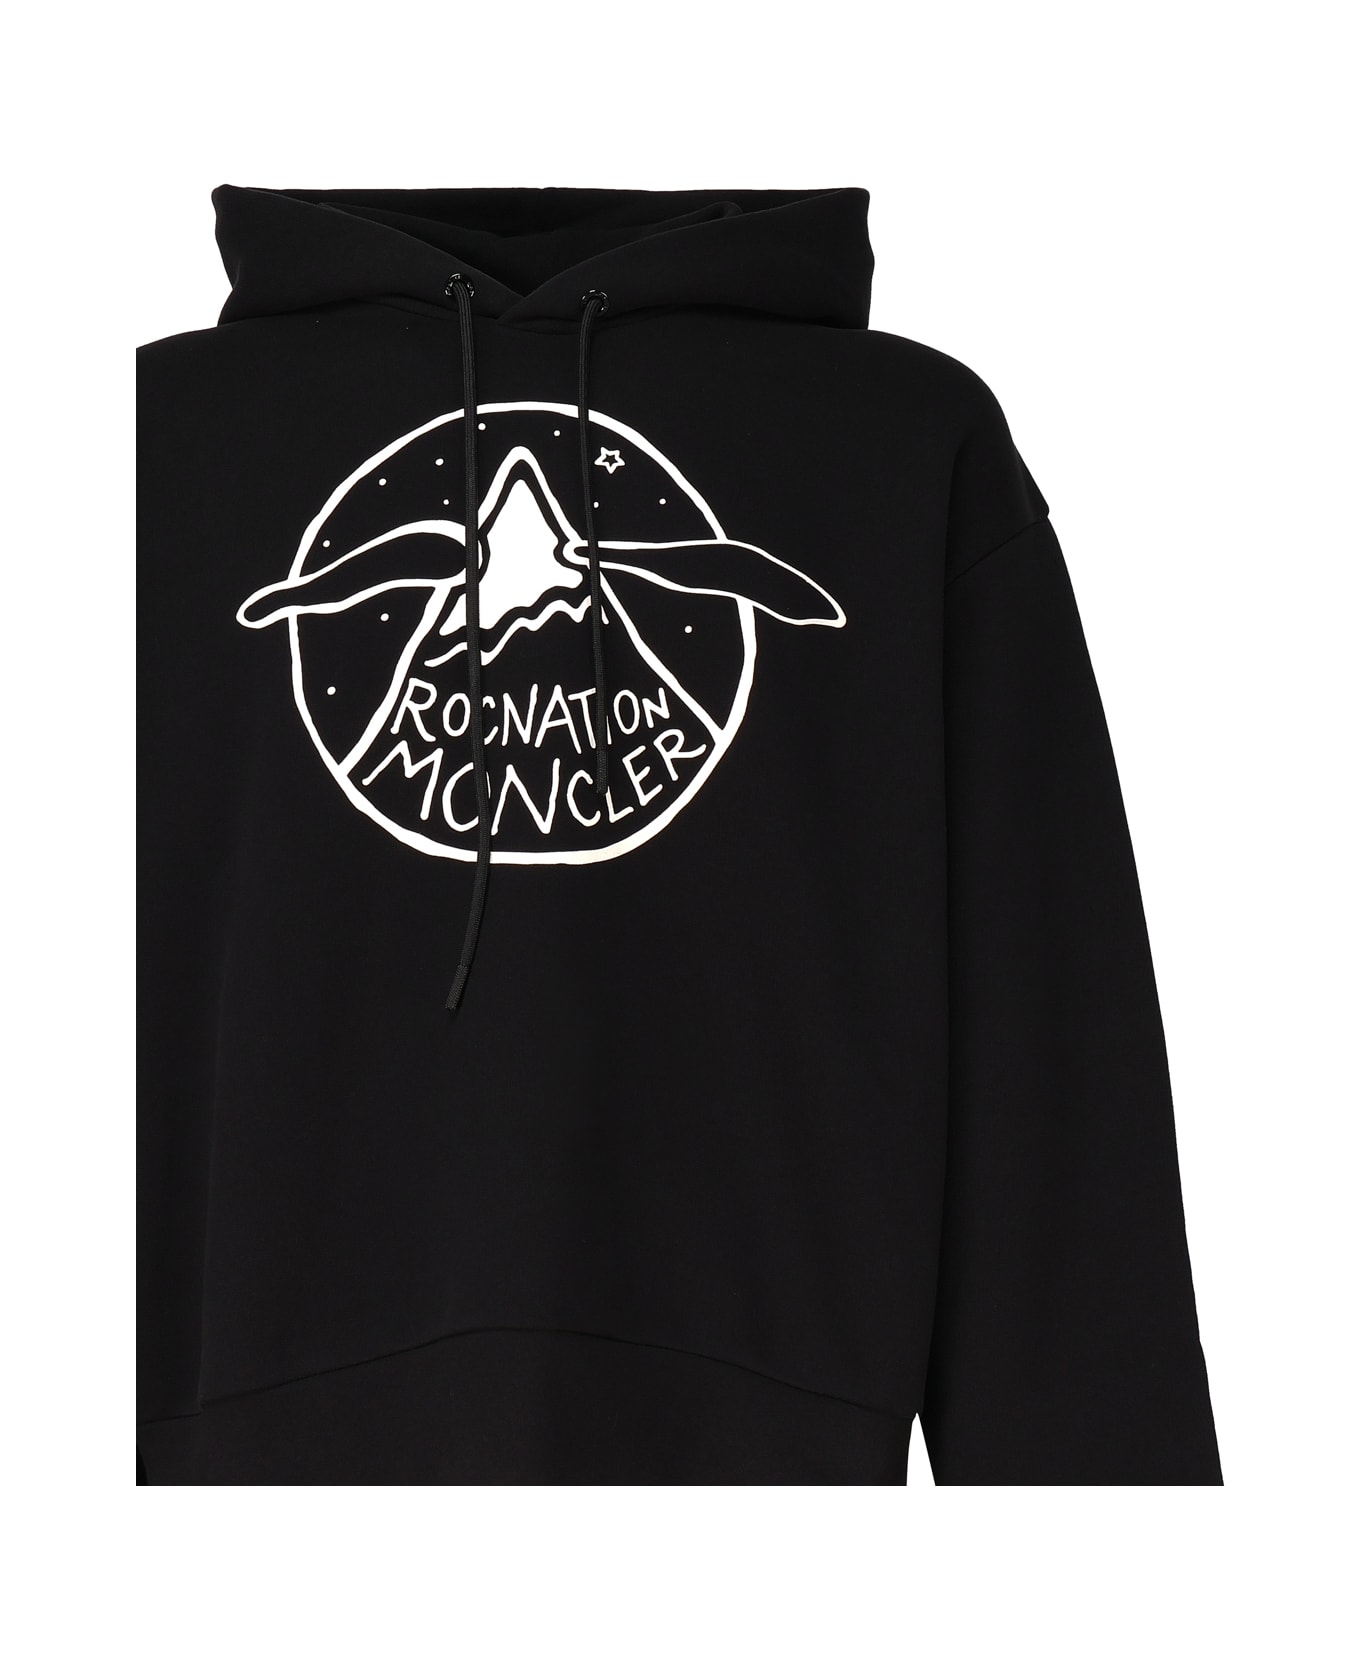 Moncler Genius Logoed Hooded And Zippered Sweatshirt - Black